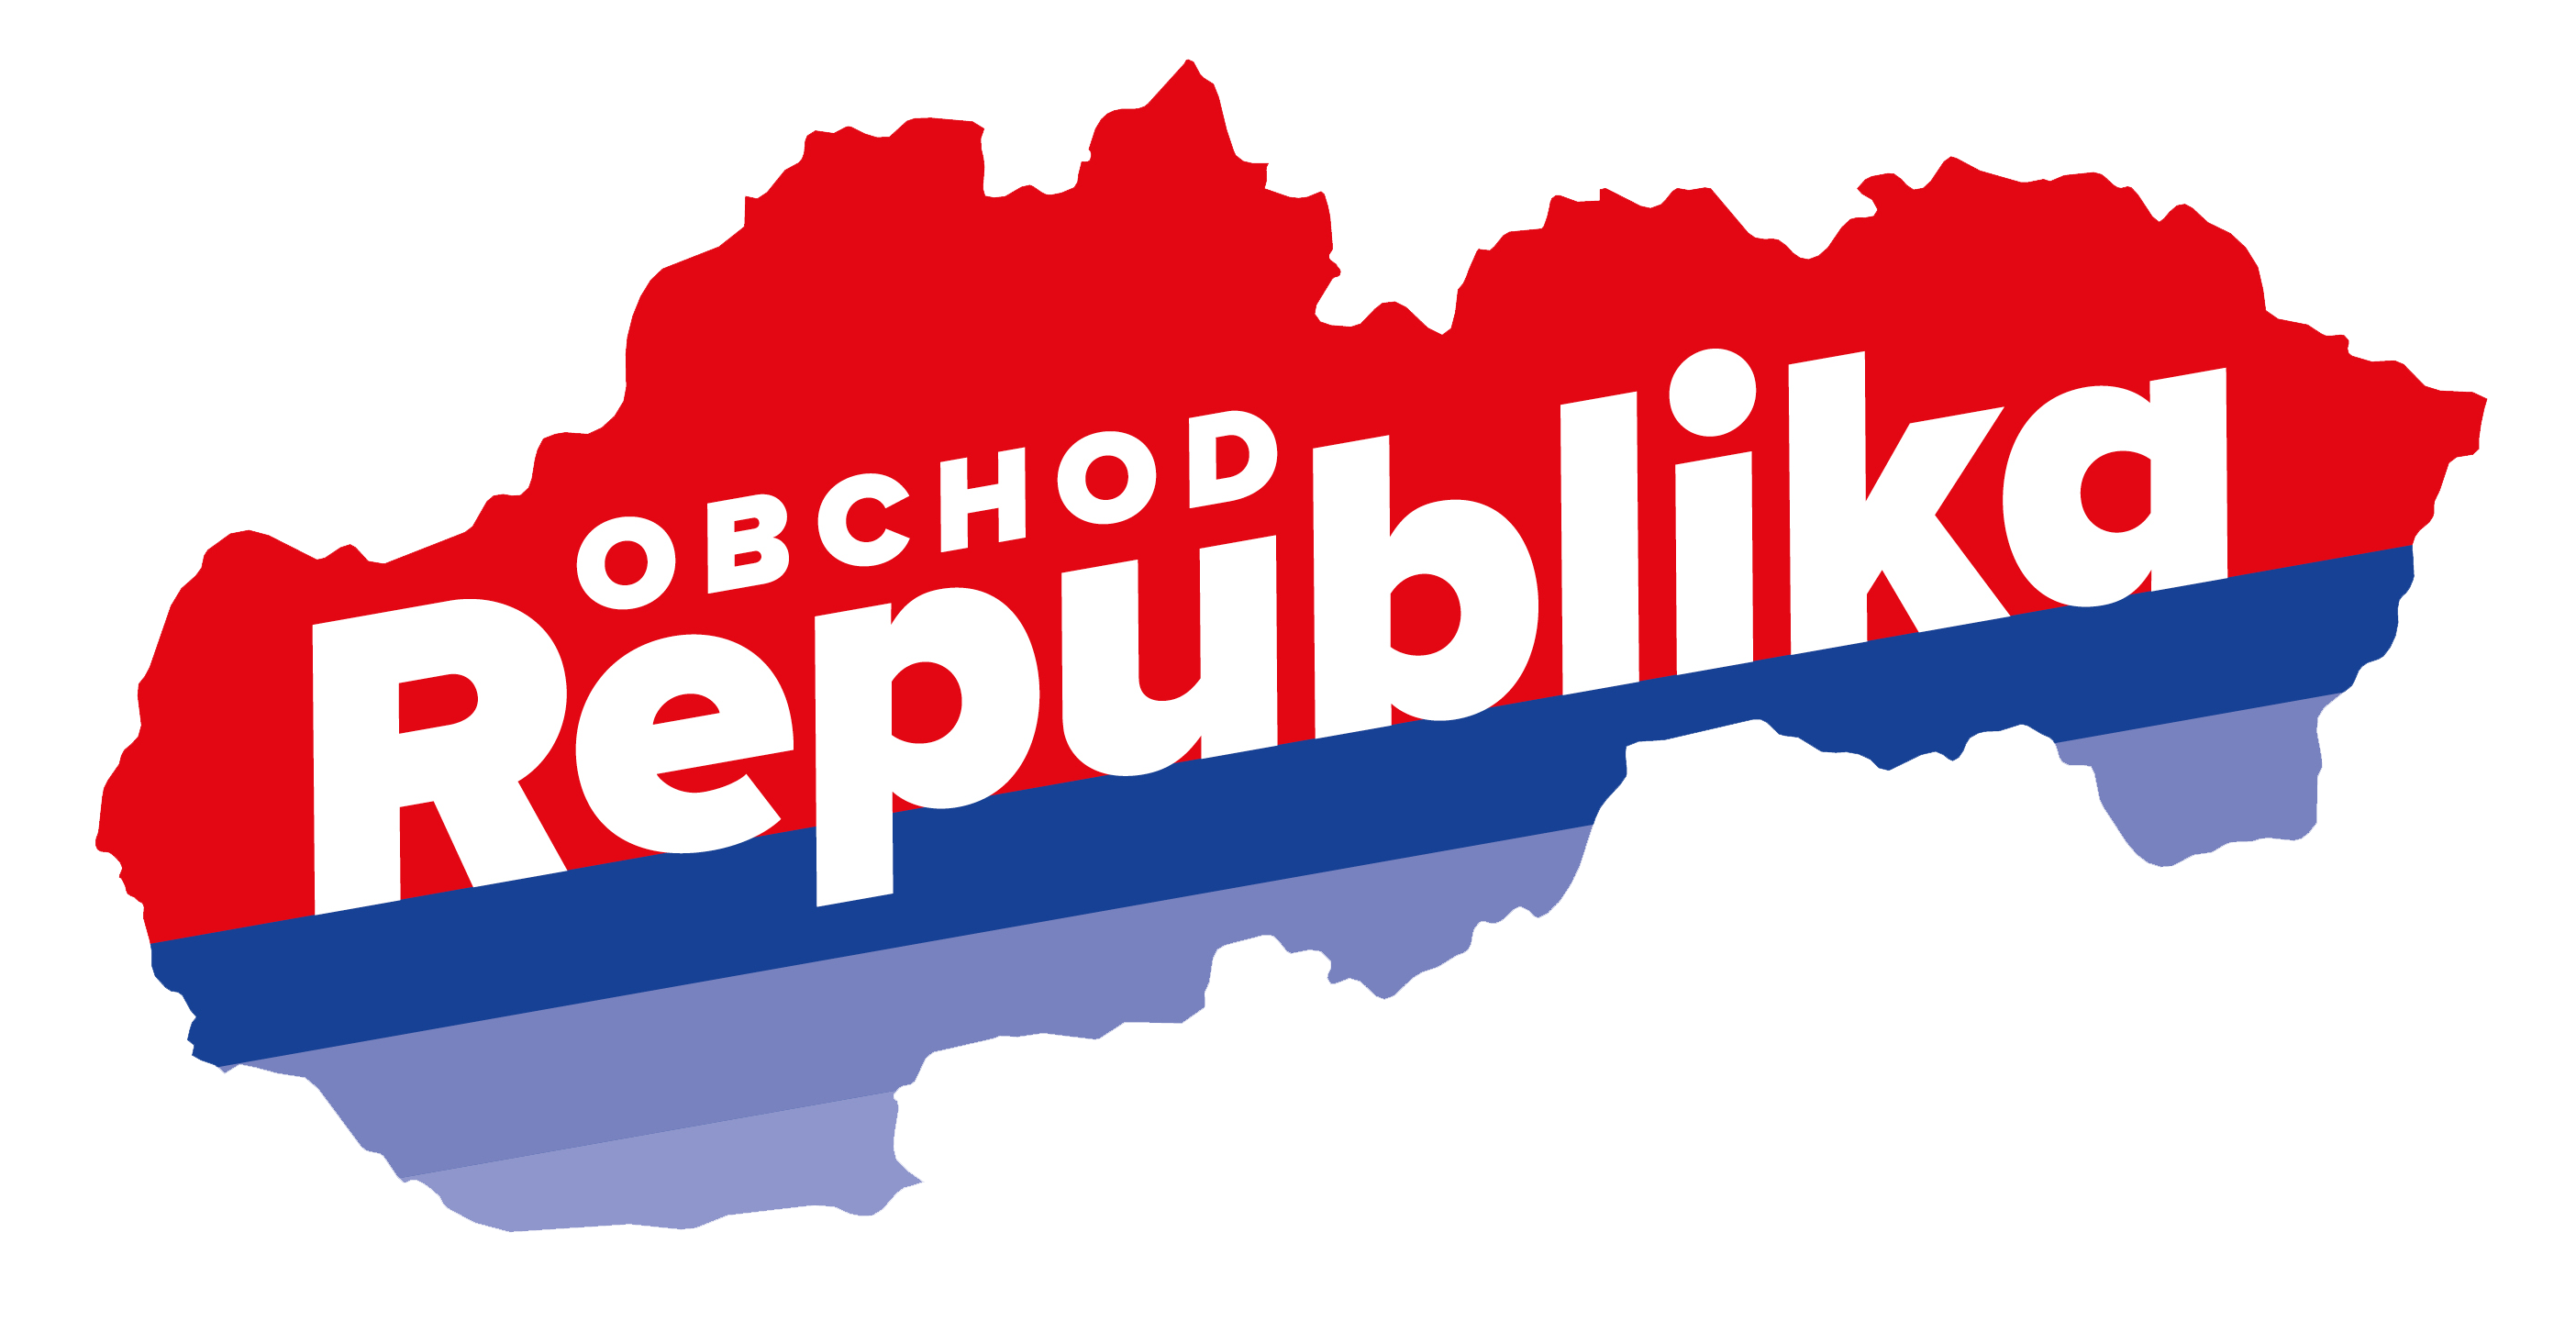 obchod-republika.sk